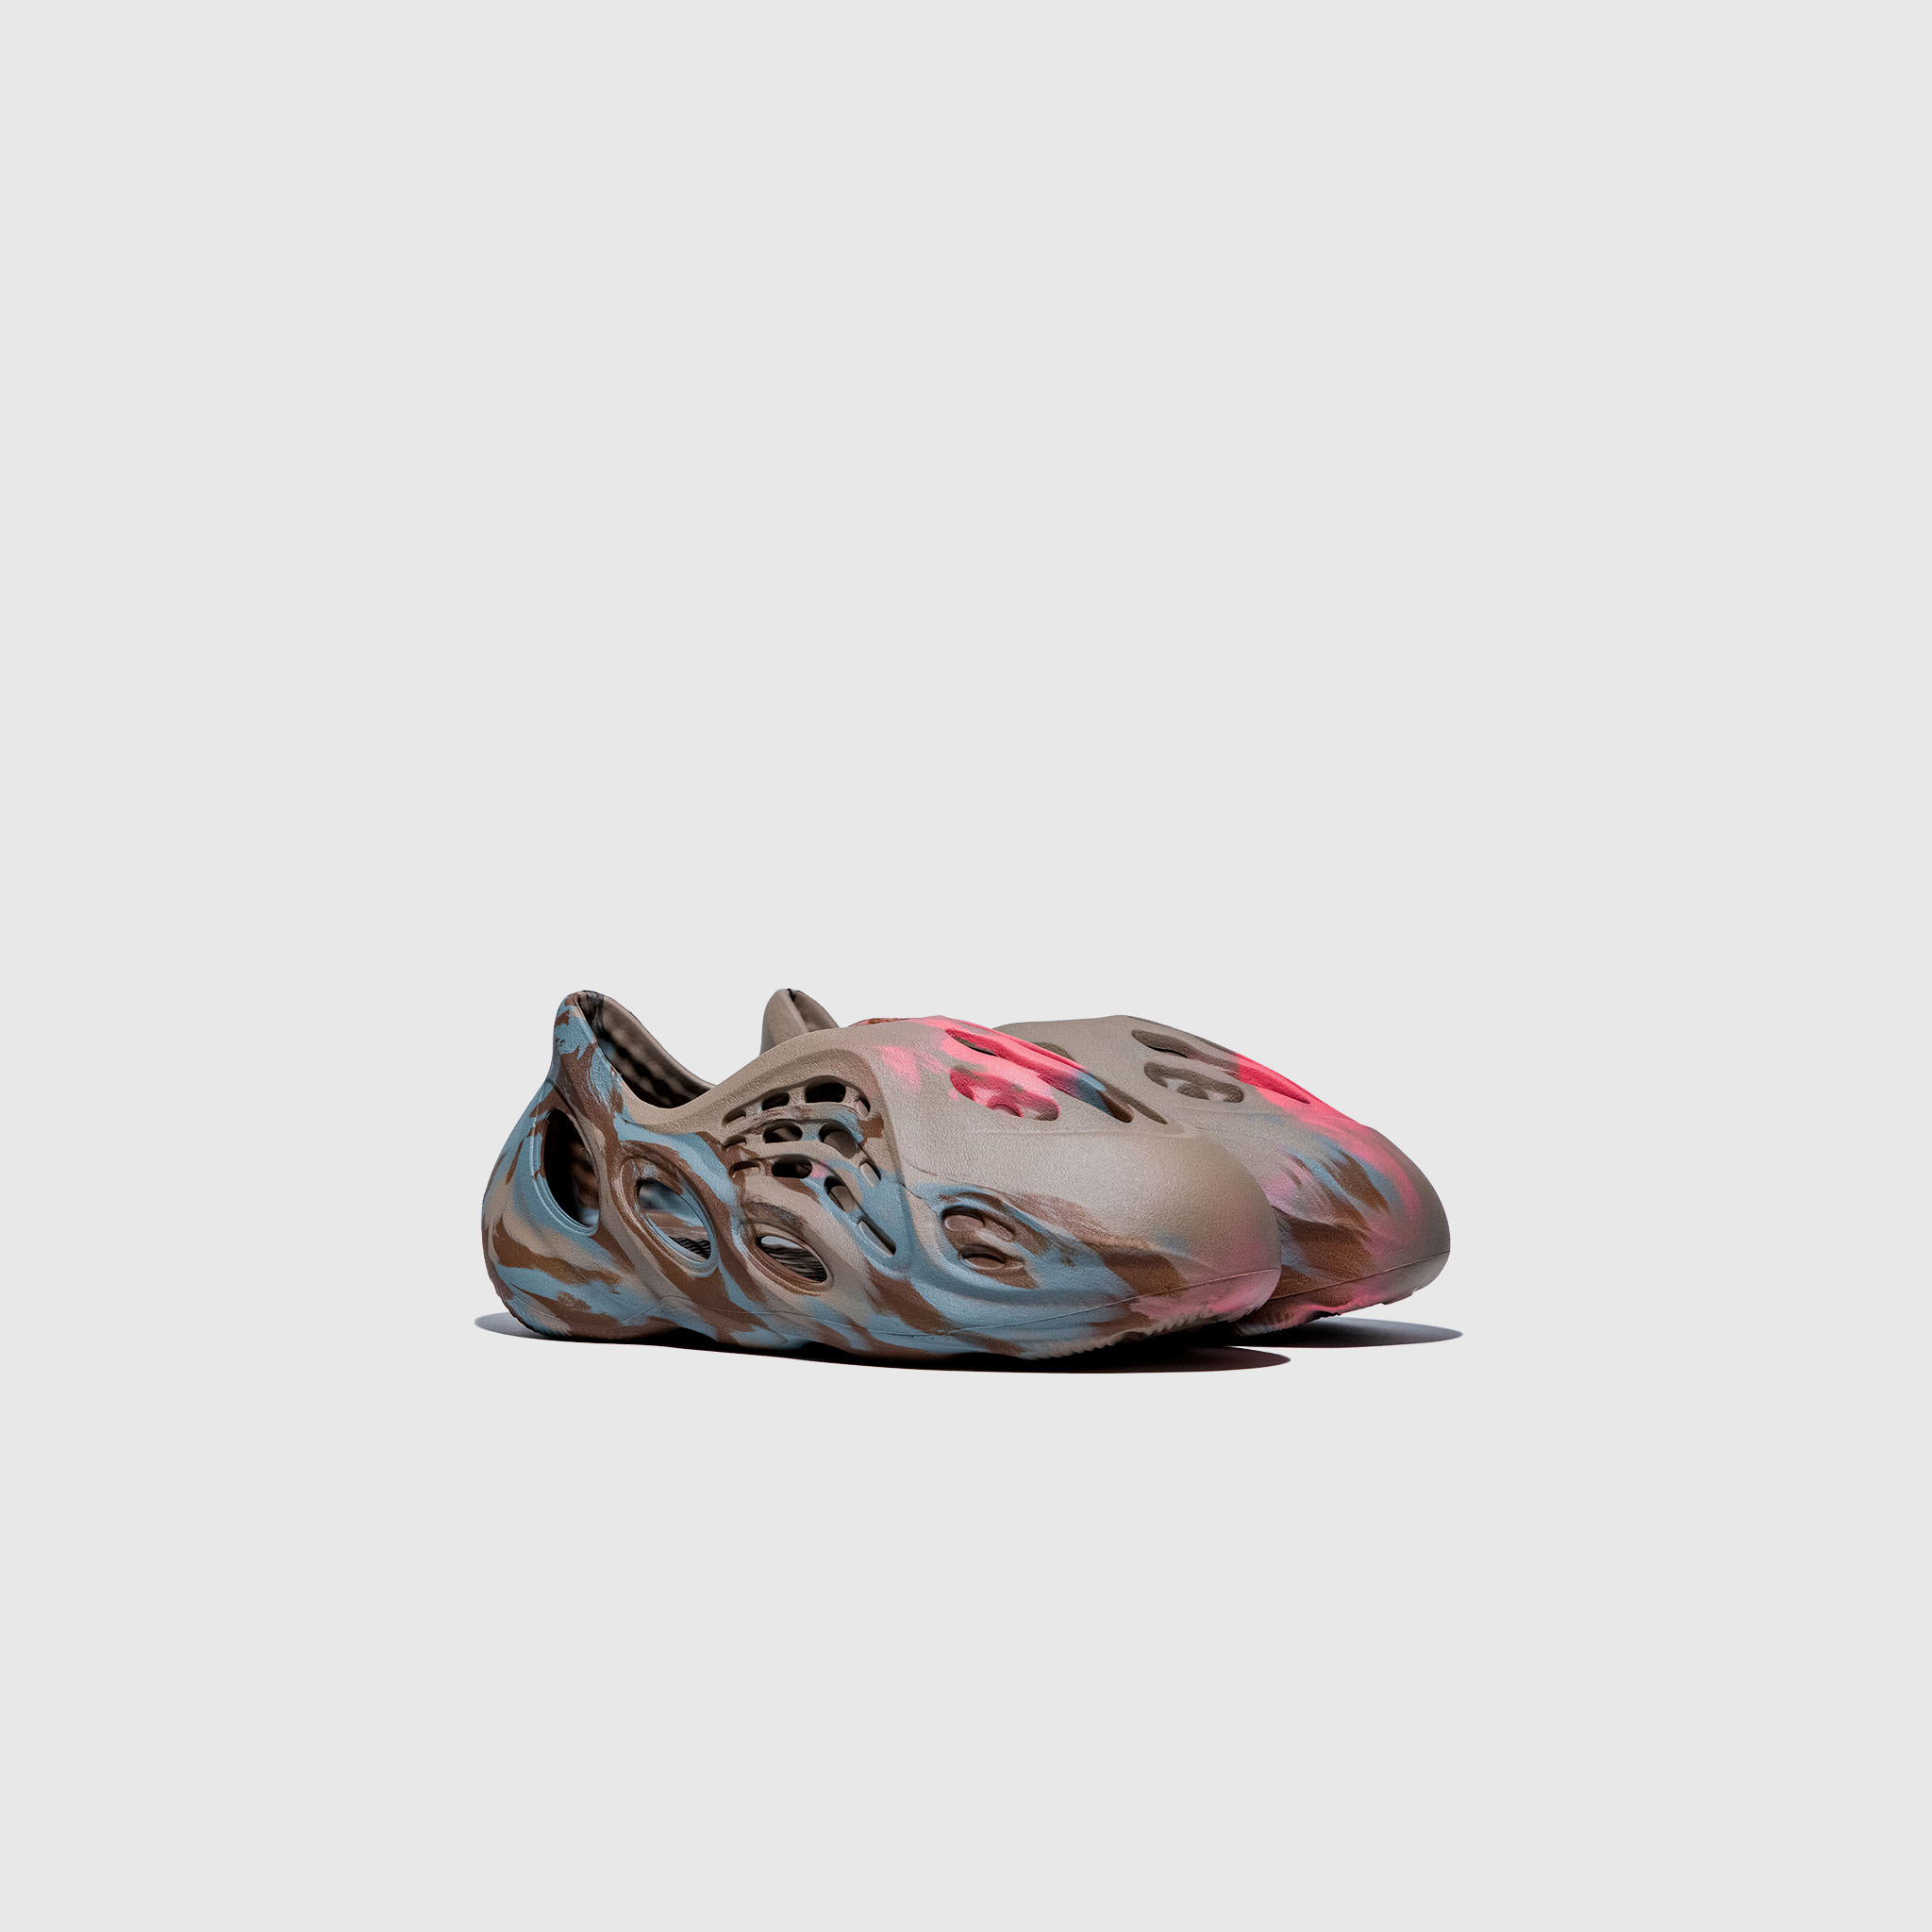 adidas KIDS YEEZY Foam Runner Sand 17cm - キッズ靴